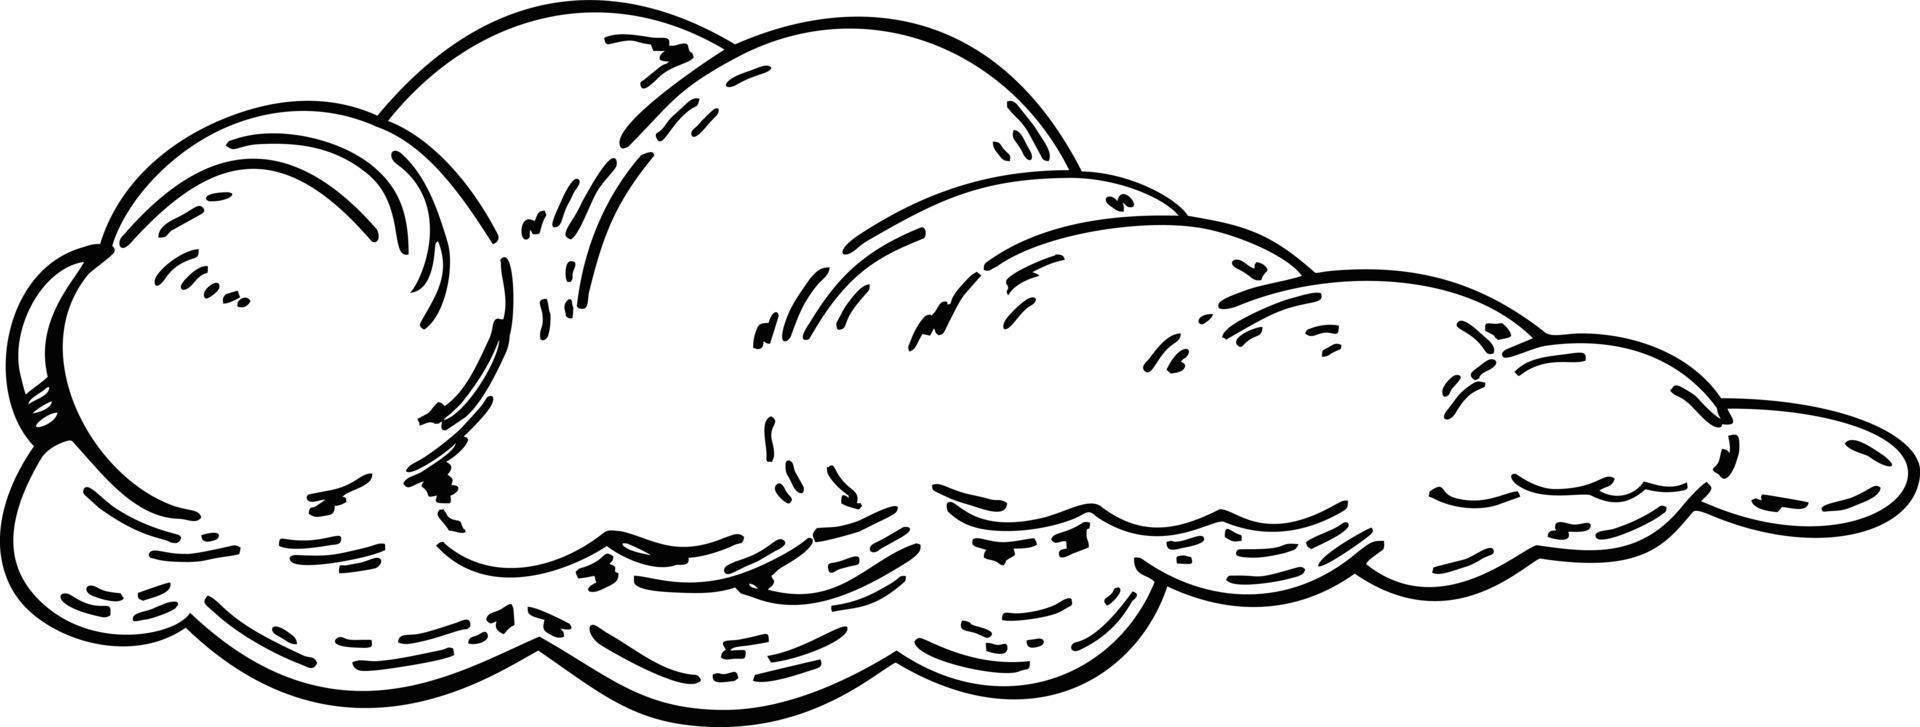 Cloud in hand drawn vintage retro style. Cartoon design element. Vector illustration